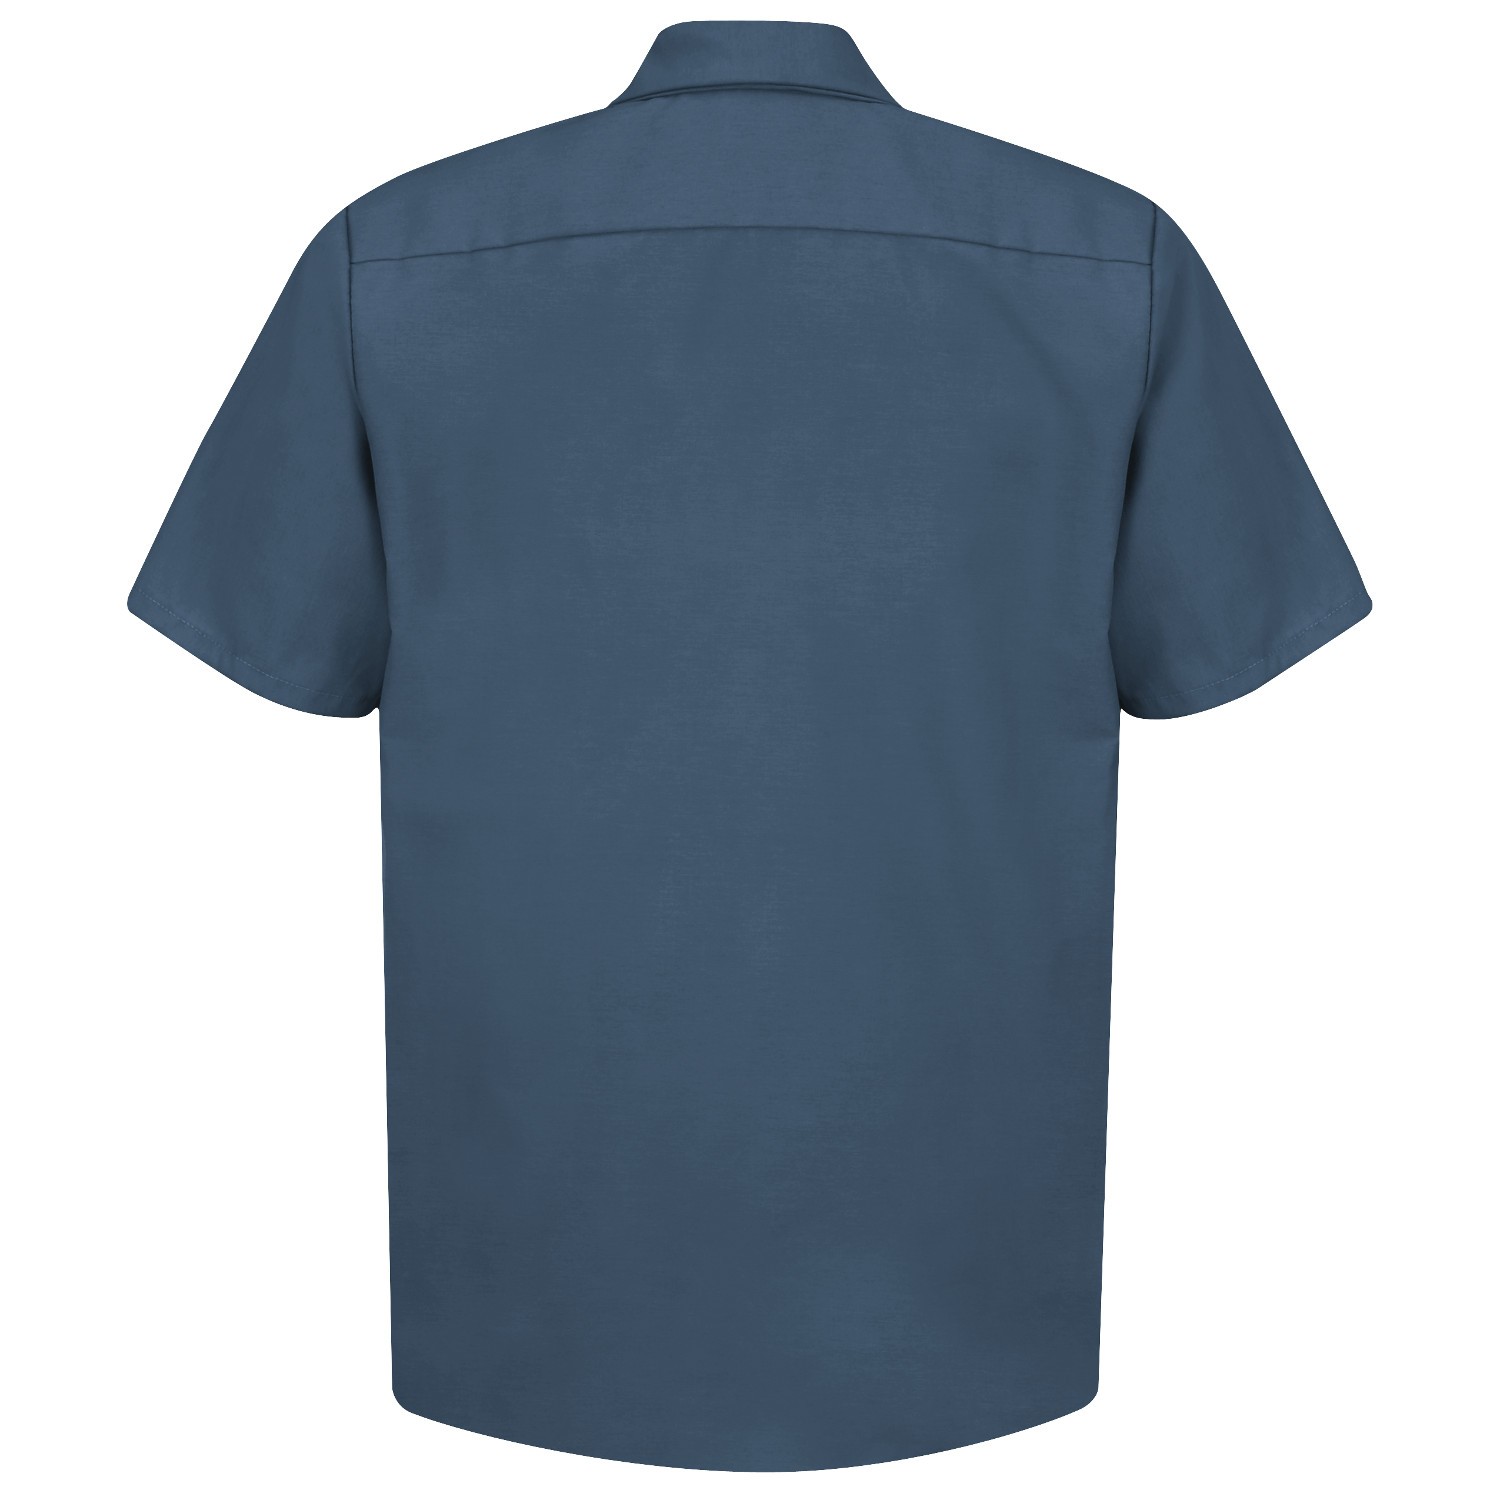 Gildan 2300 Ultra Cotton T-Shirt with Pocket - Sport Grey